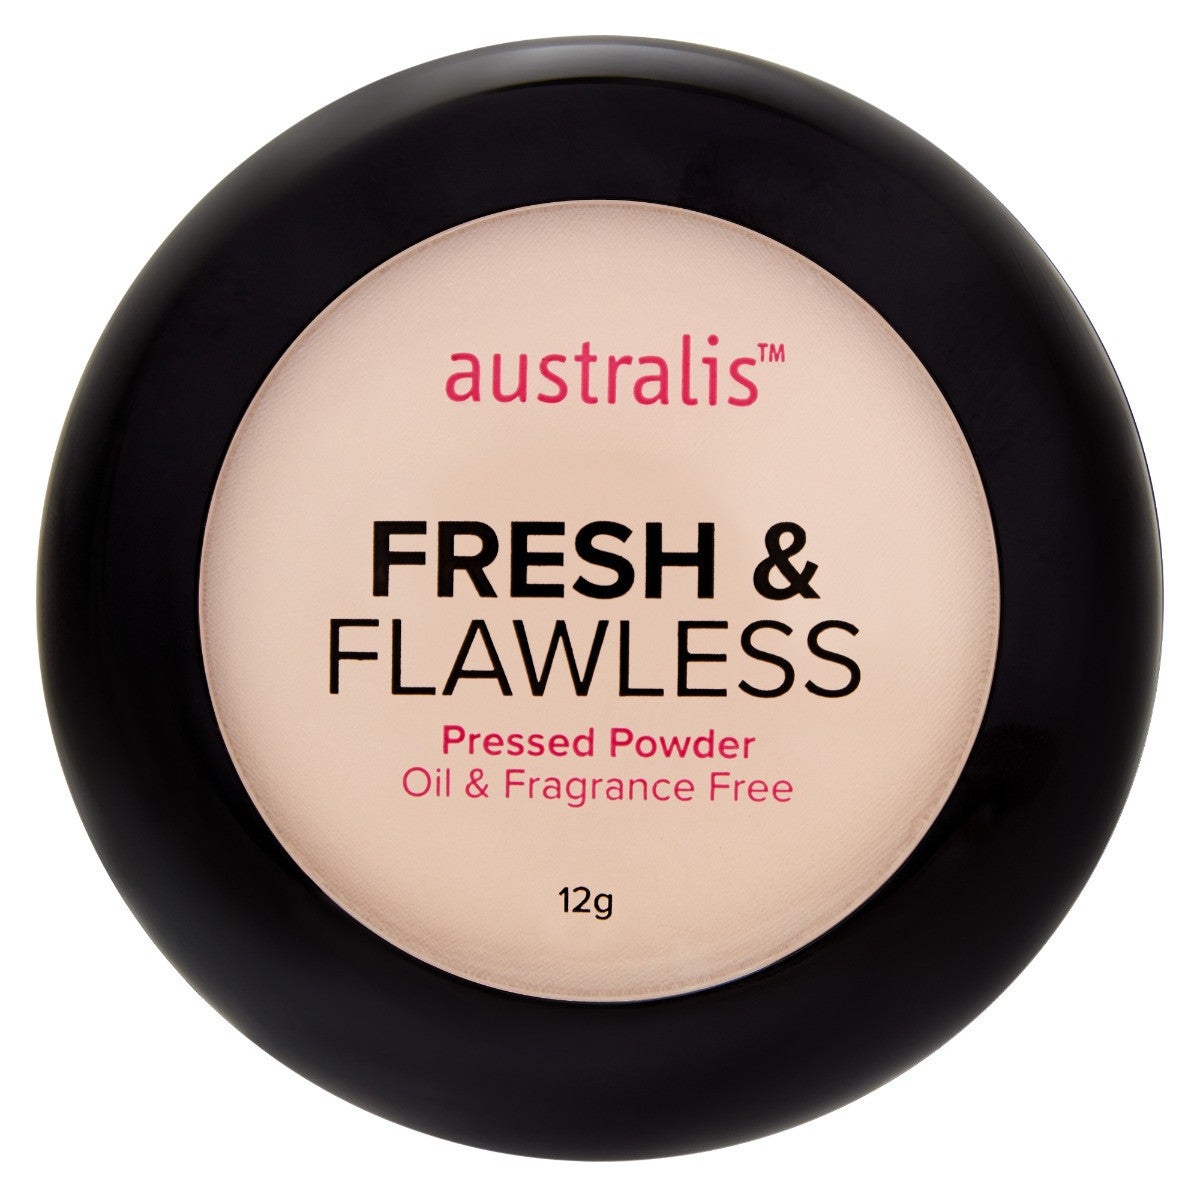 Australis AC Fresh and Flawless Pressed Powder Makeup - Light Beige Matte